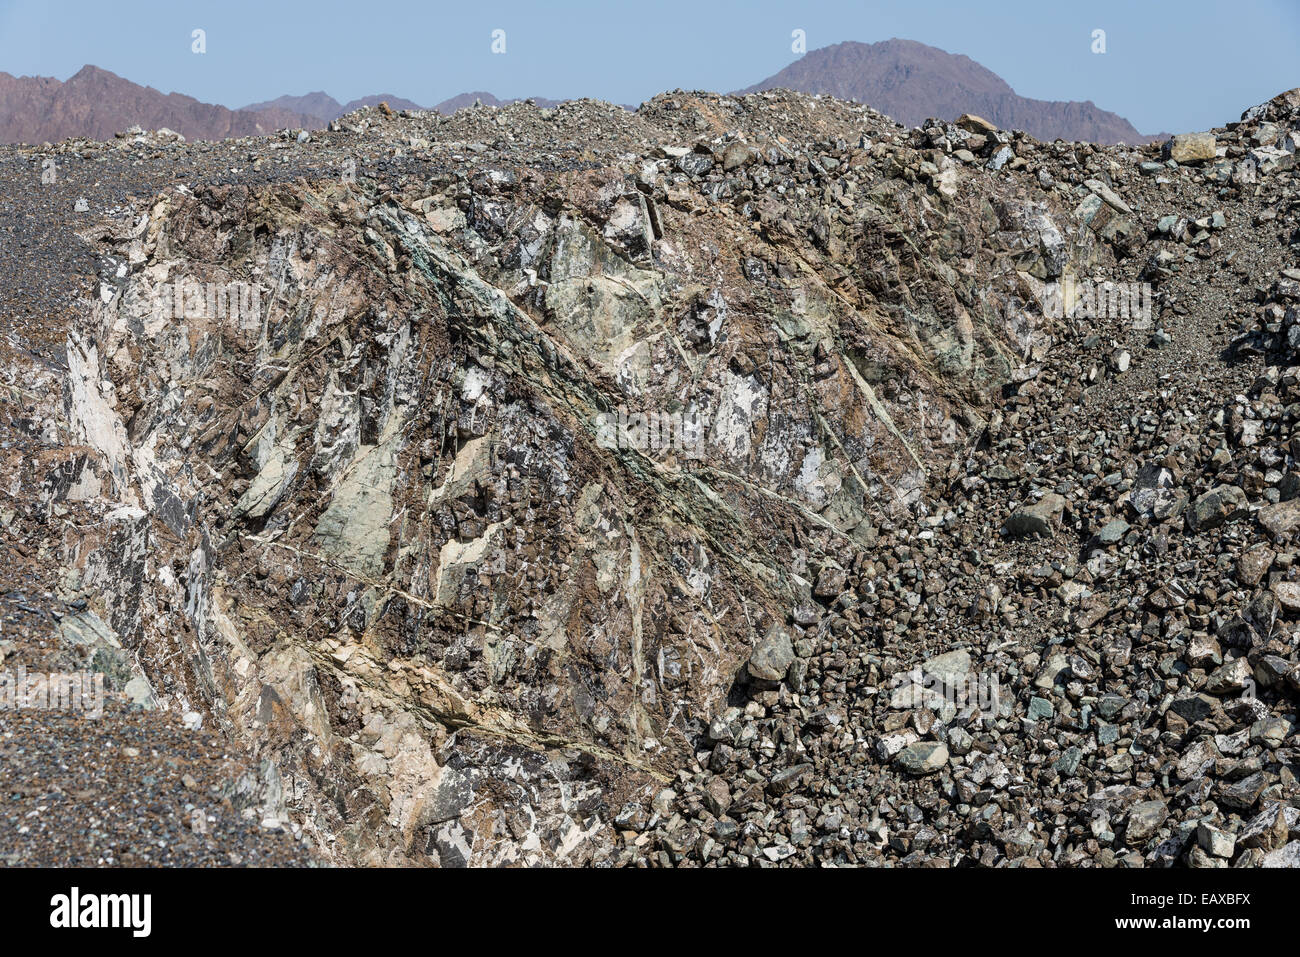 Mafic igneous rocks (gabbro) exposed in a mine pit. Oman. Stock Photo